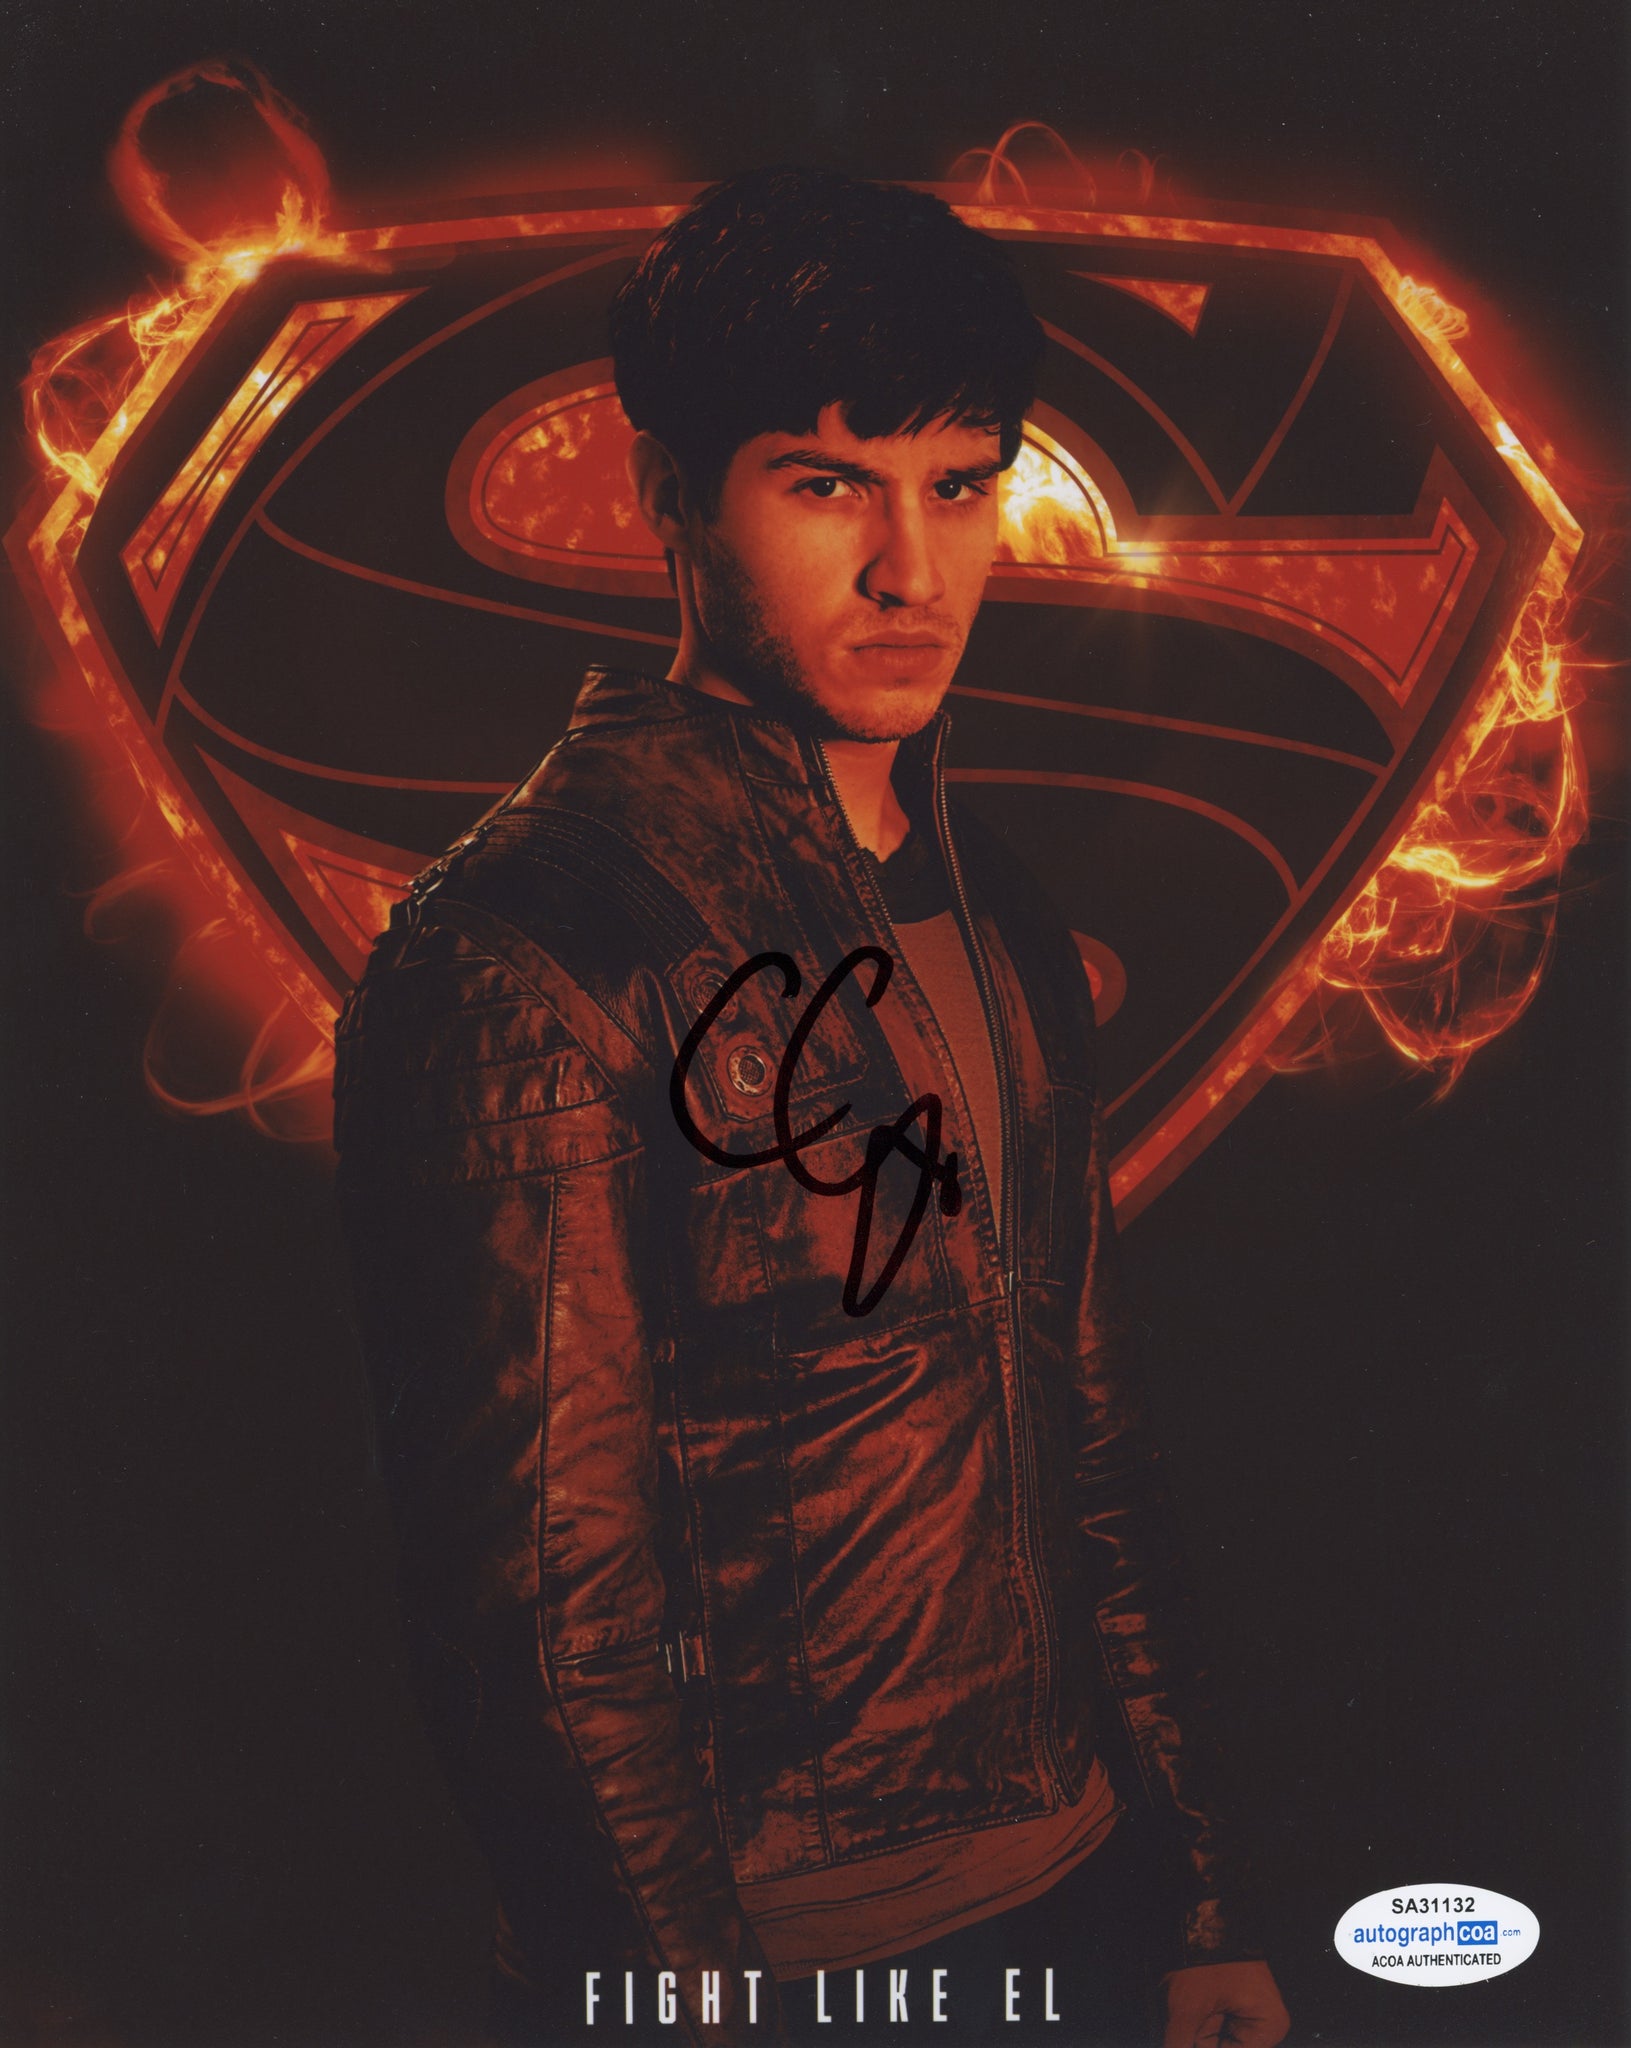 Cameron Cuffe Krypton Signed Autograph 8x10 Photo ACOA #3 - Outlaw Hobbies Authentic Autographs